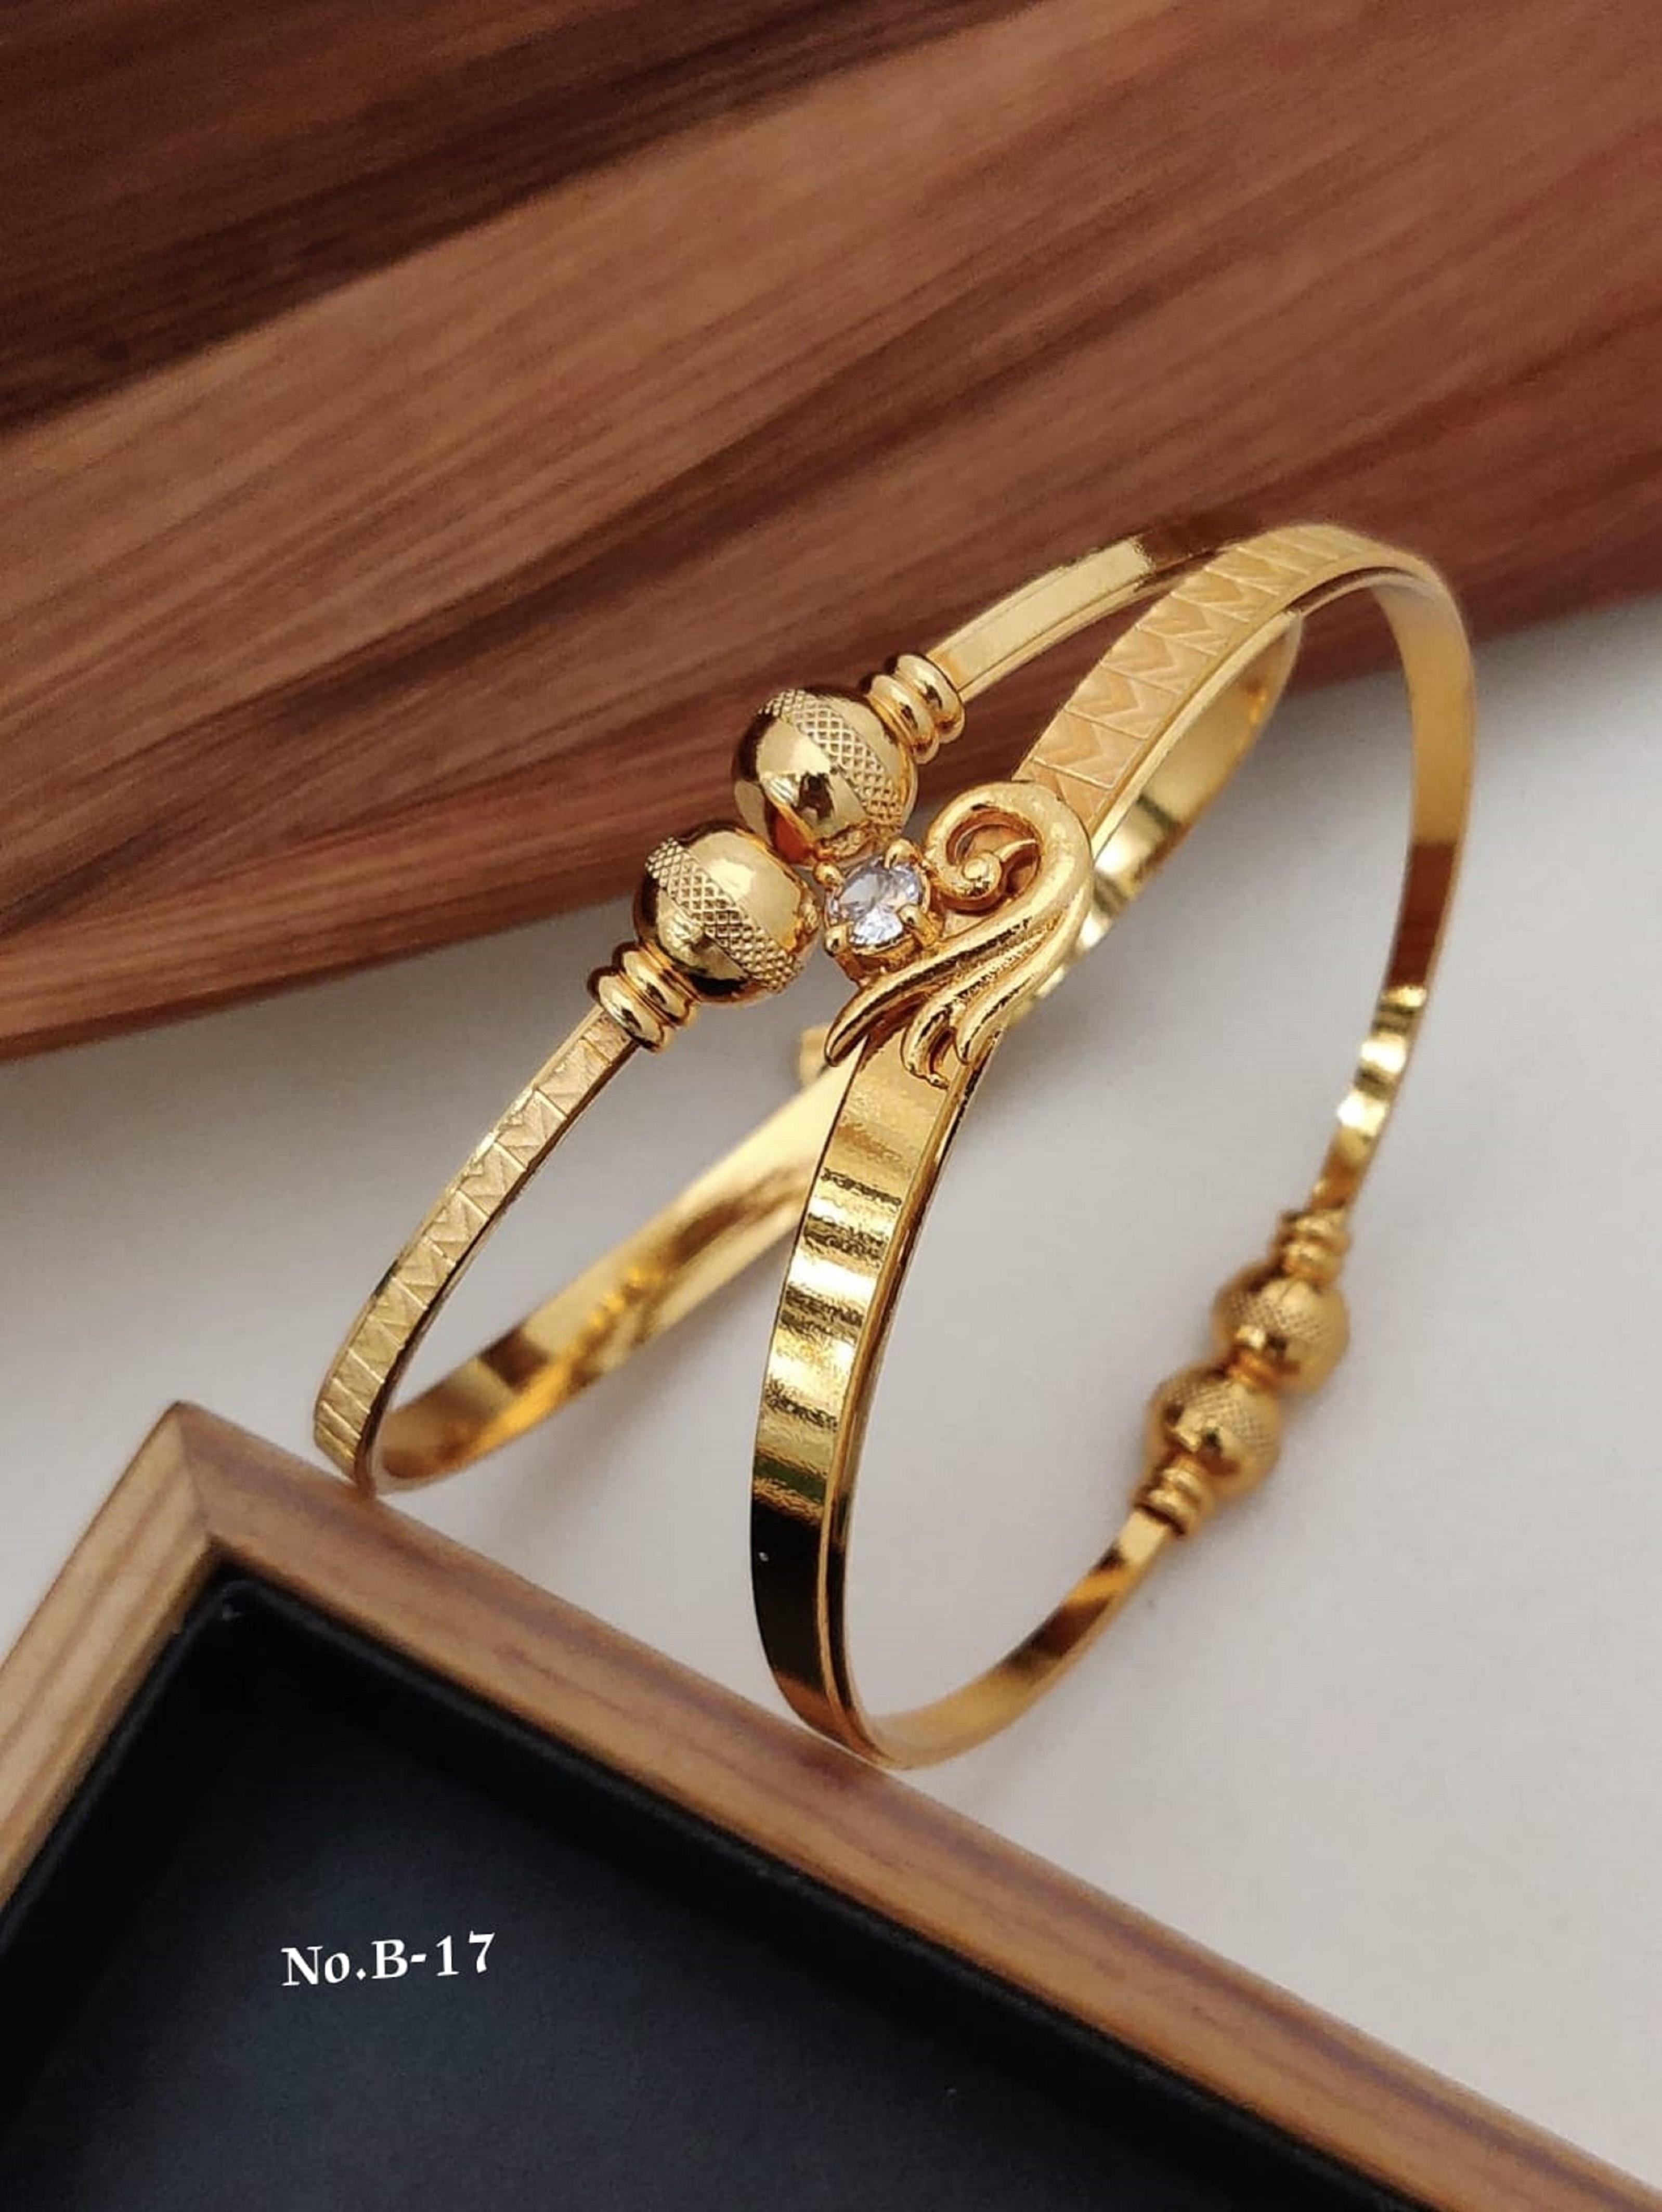 Details more than 79 gold tone bangle bracelets